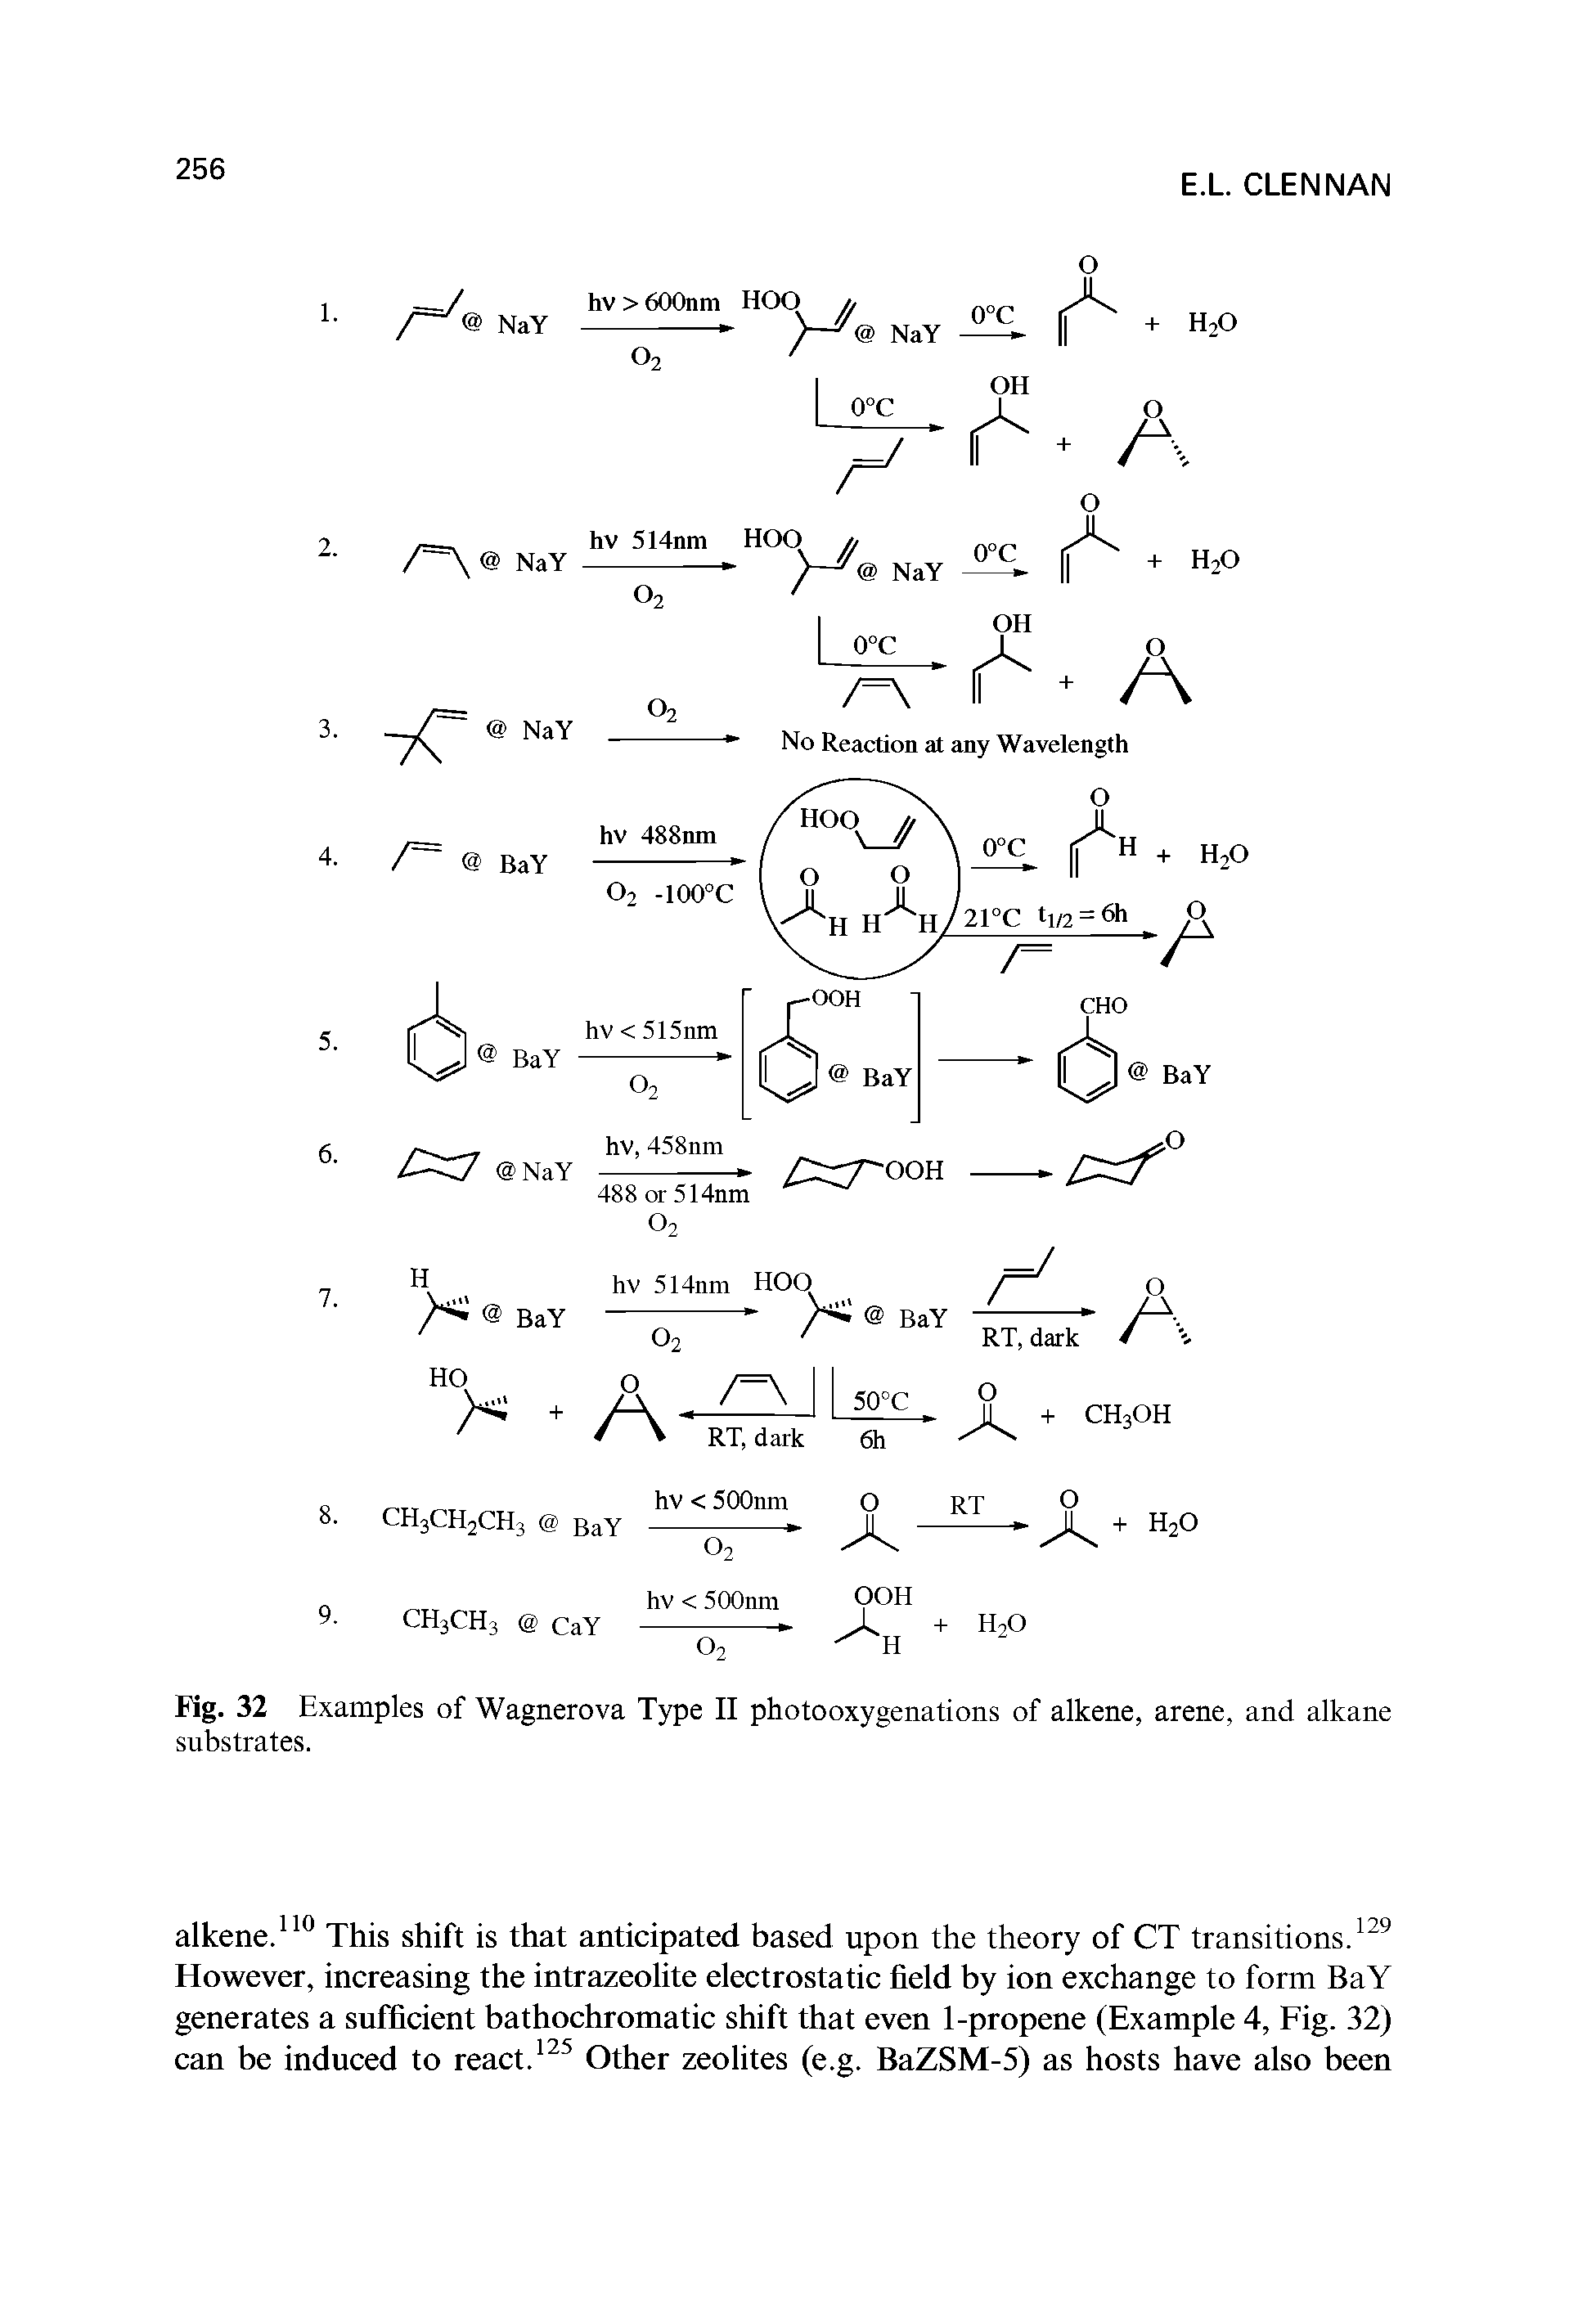 Fig. 32 Examples of Wagnerova Type II photooxygenations of alkene, arene, and alkane substrates.